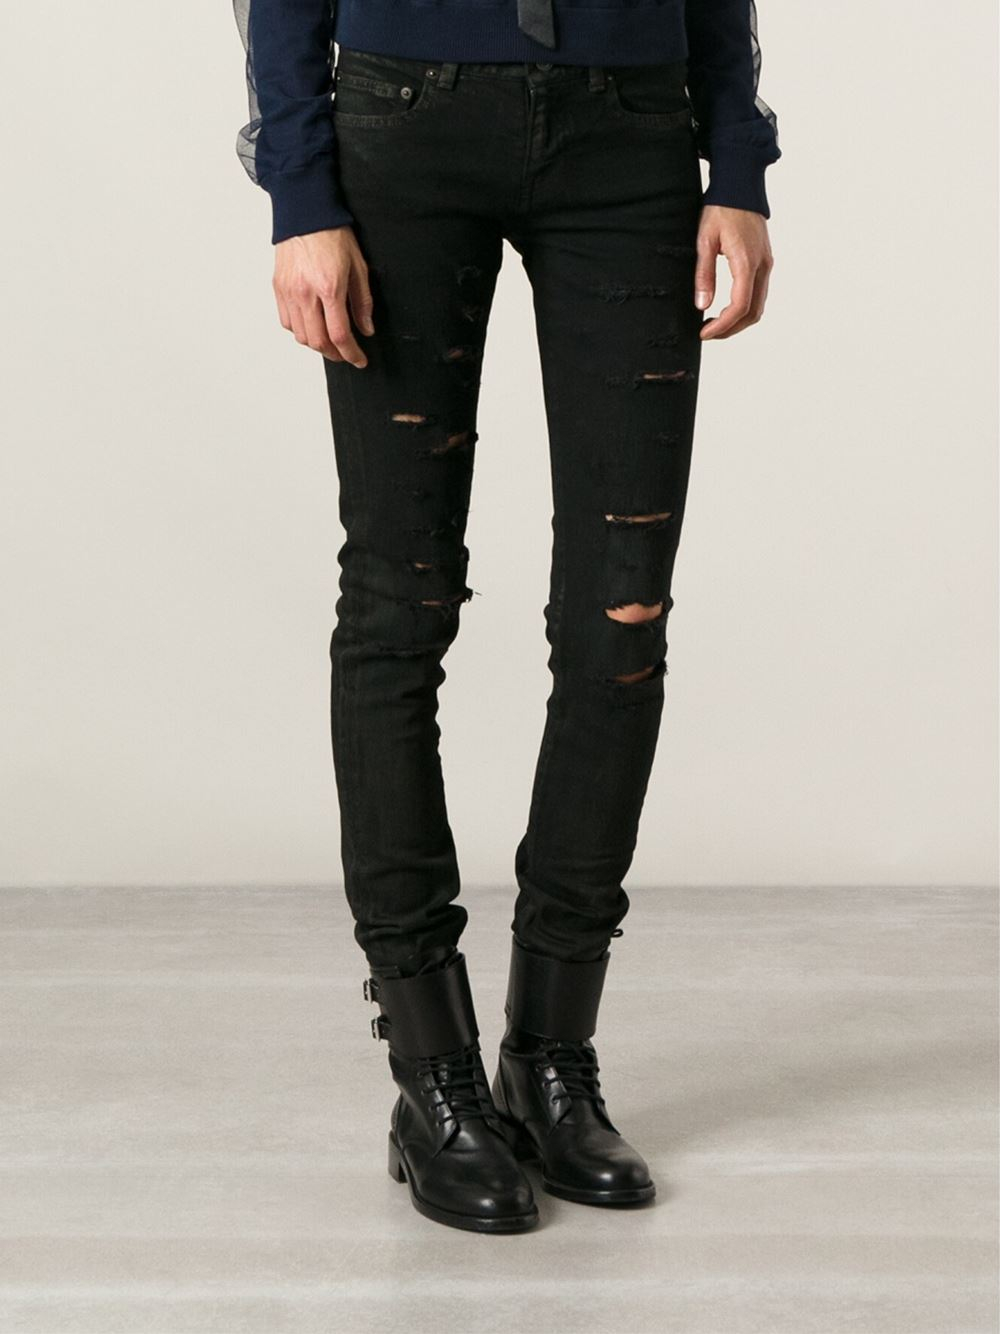 Saint Laurent Distressed Skinny Jeans in Black - Lyst